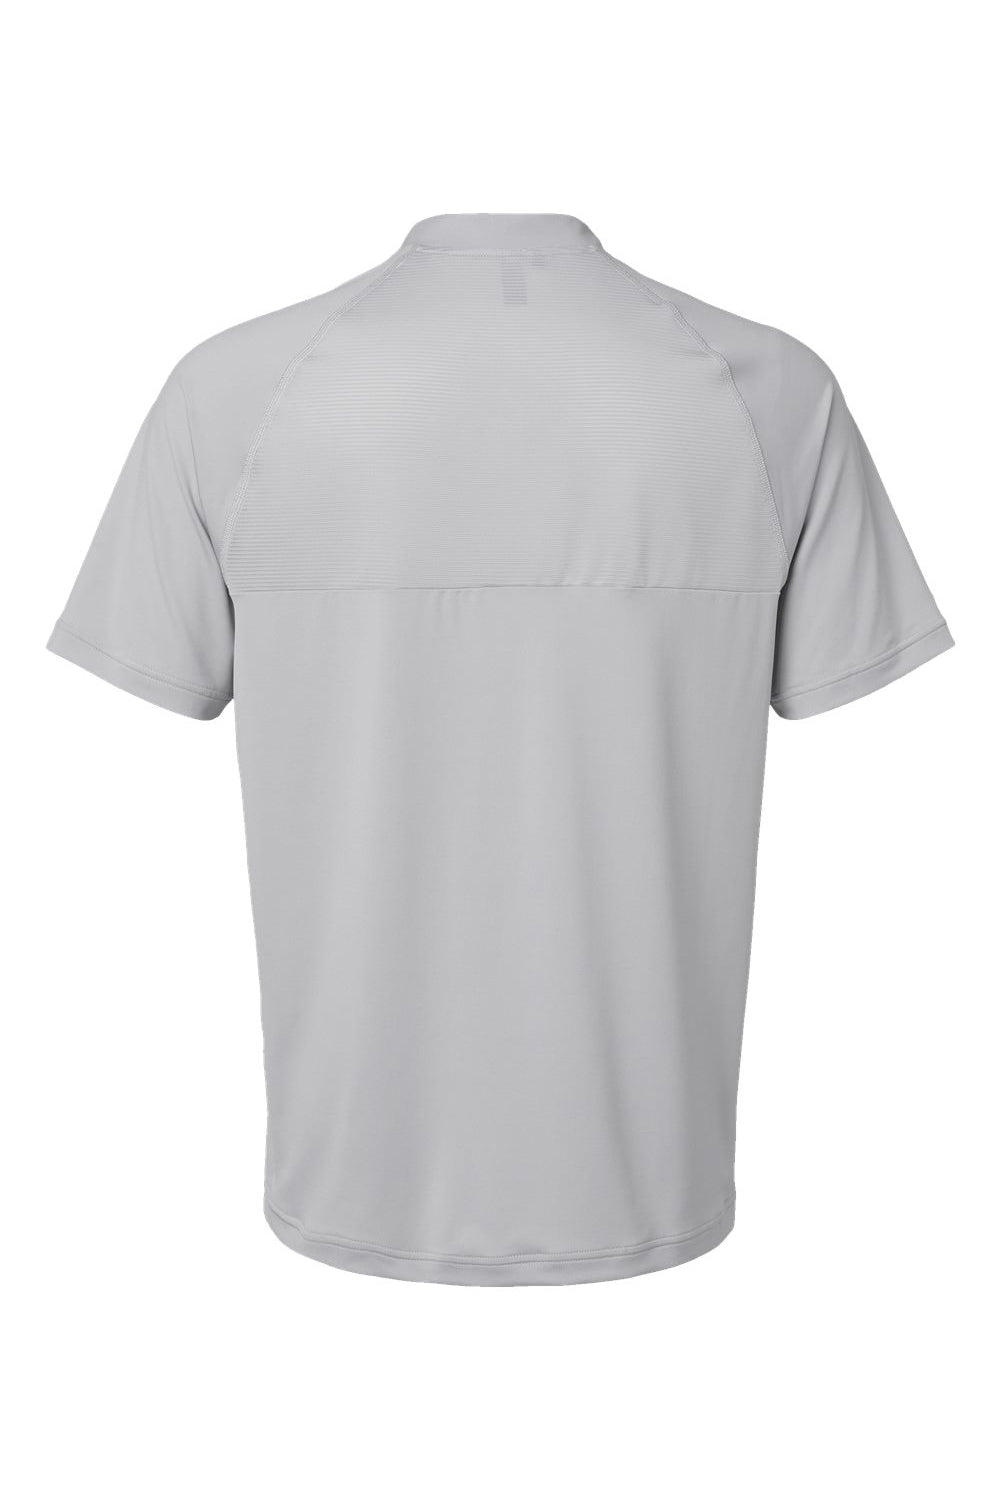 Adidas A584 Mens Sport Collar Short Sleeve Polo Shirt Grey Flat Back